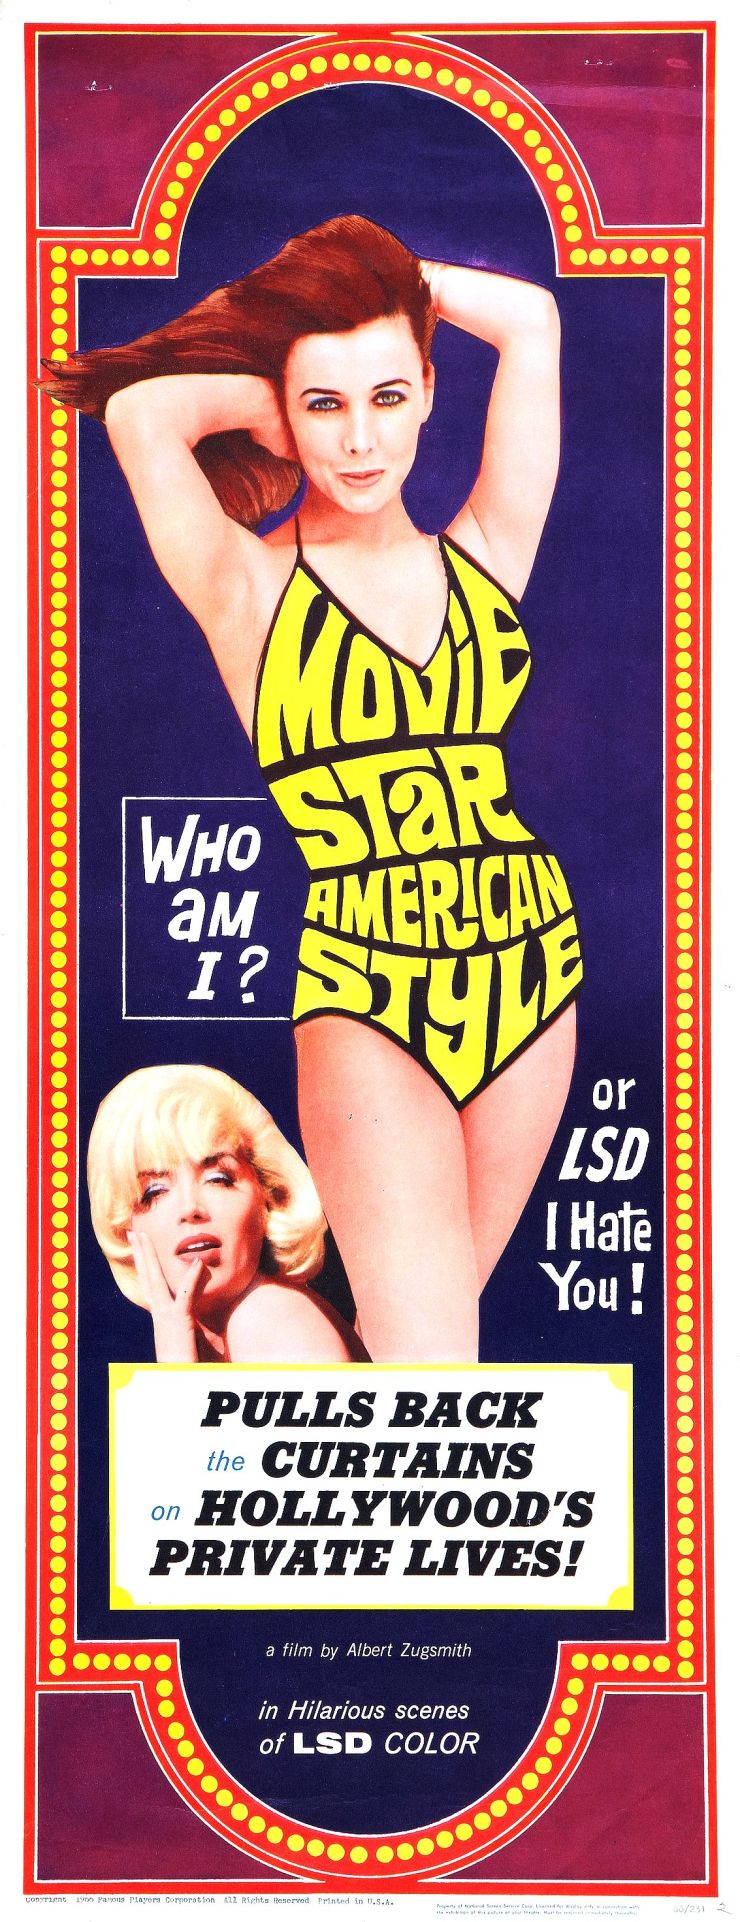 Movie Star American Style